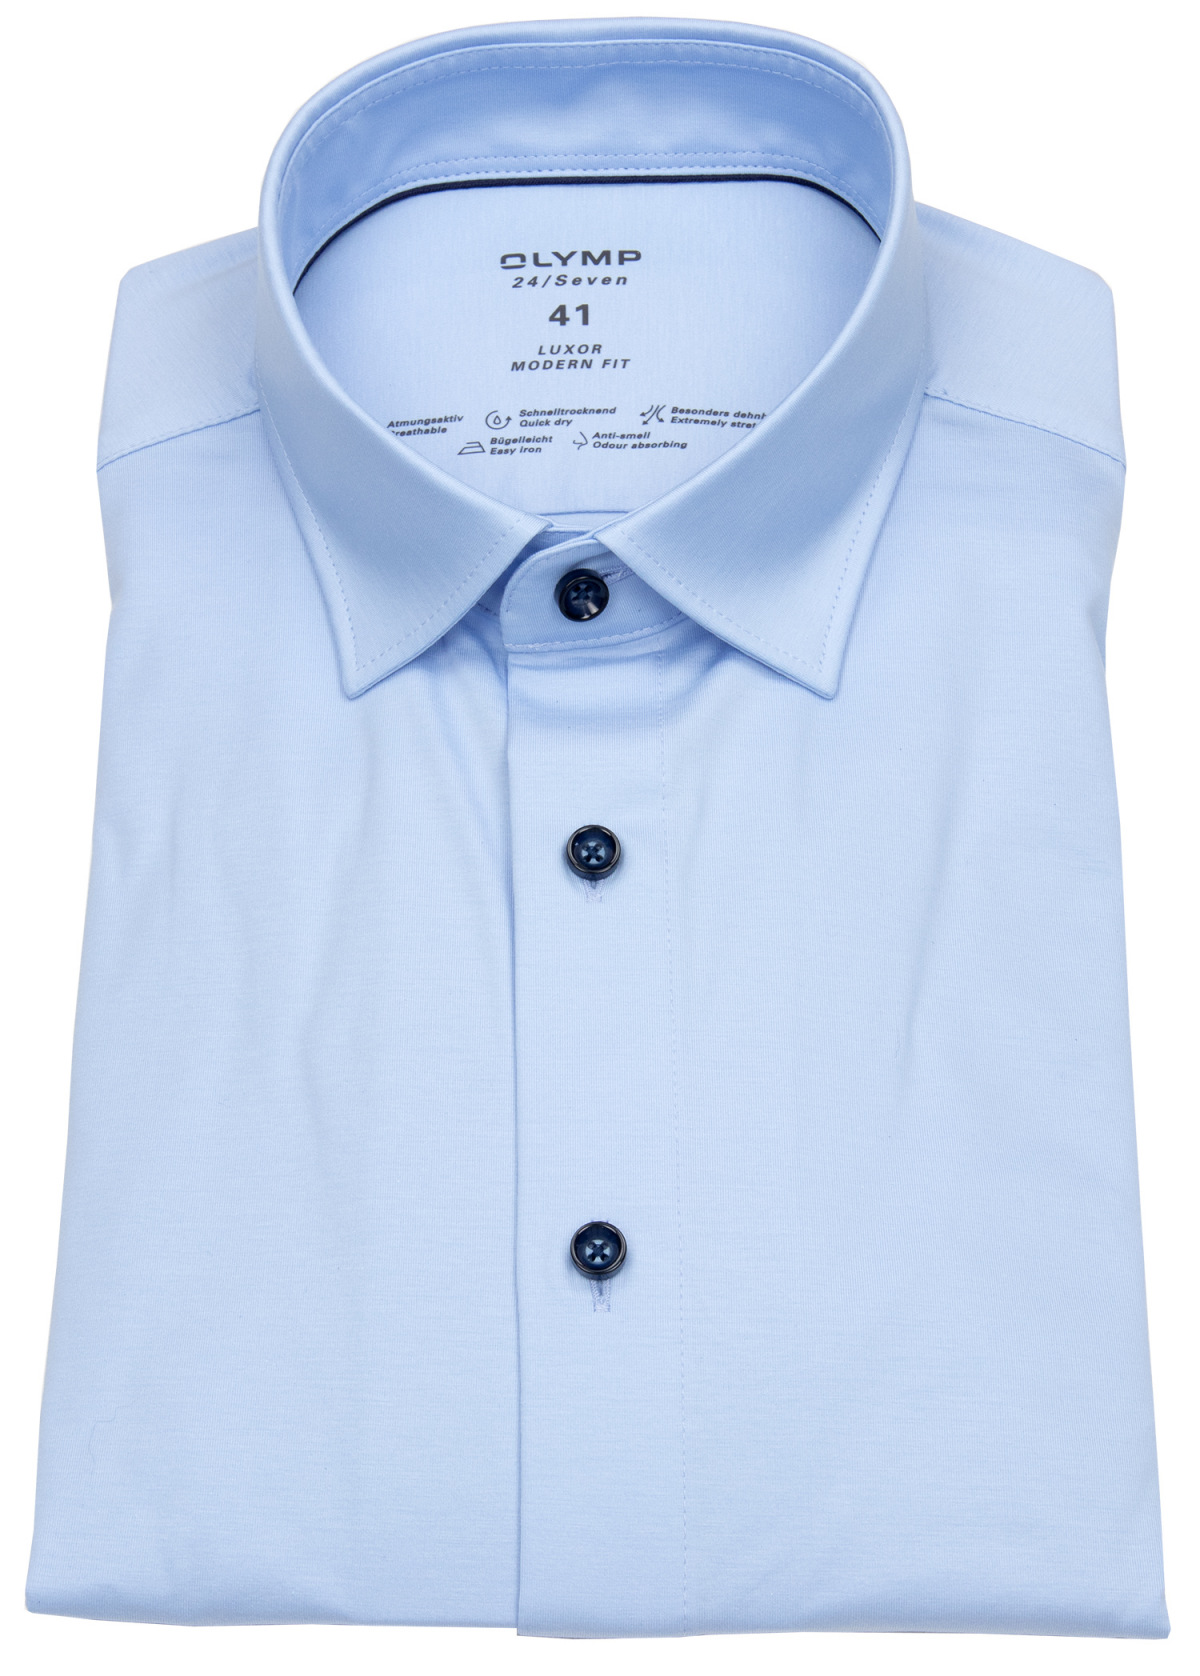 OLYMP Hemd - Modern Fit - 24 / Seven - All Time Shirt - hellblau | Klassische Hemden